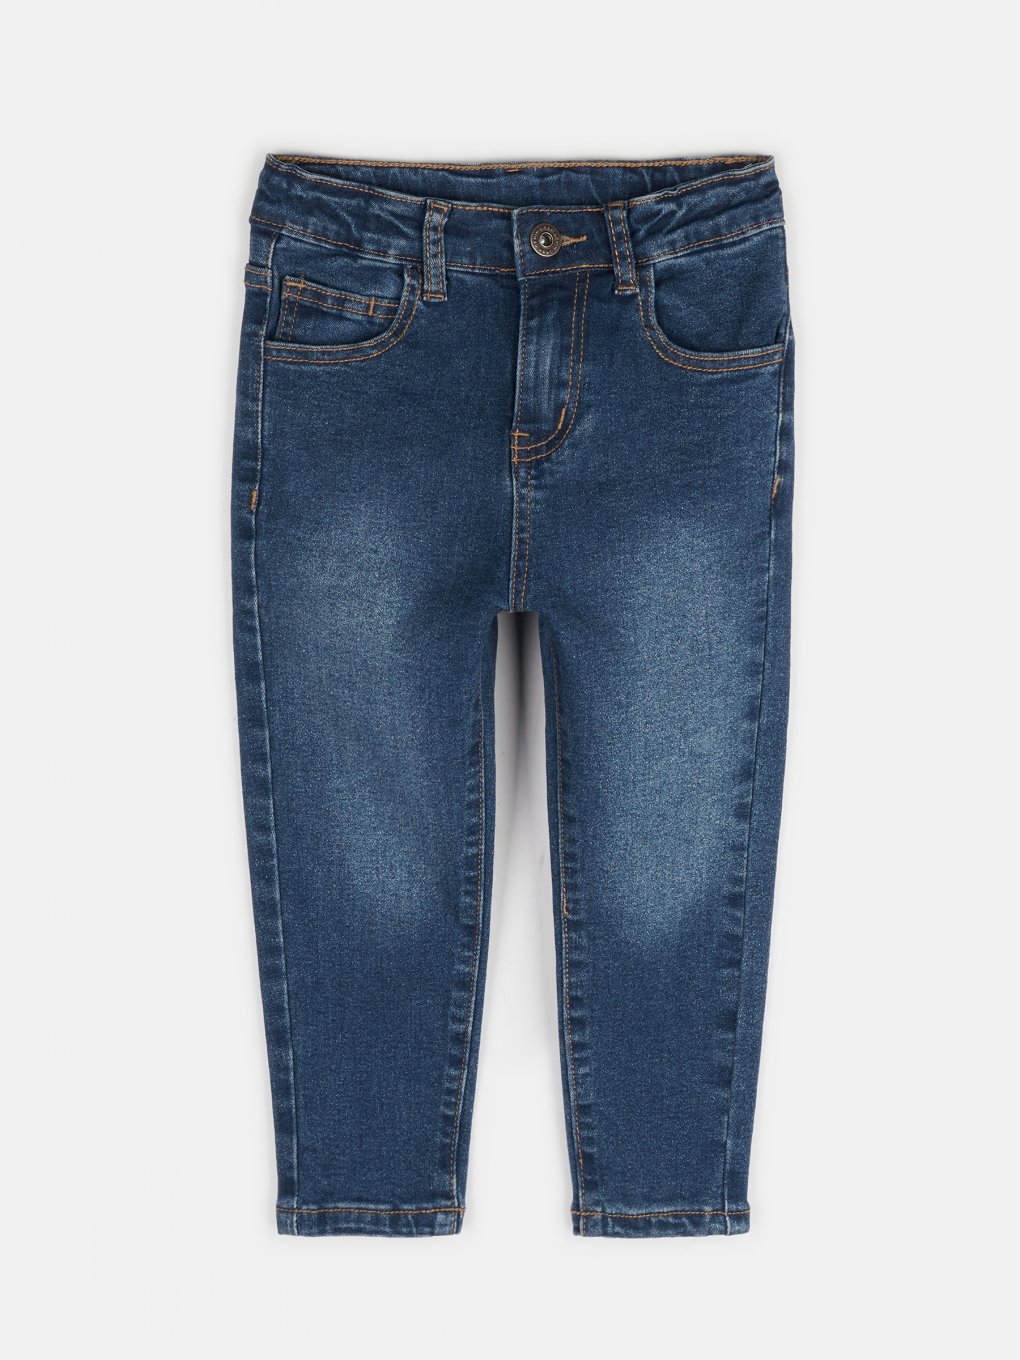 Straight slim basic jeans